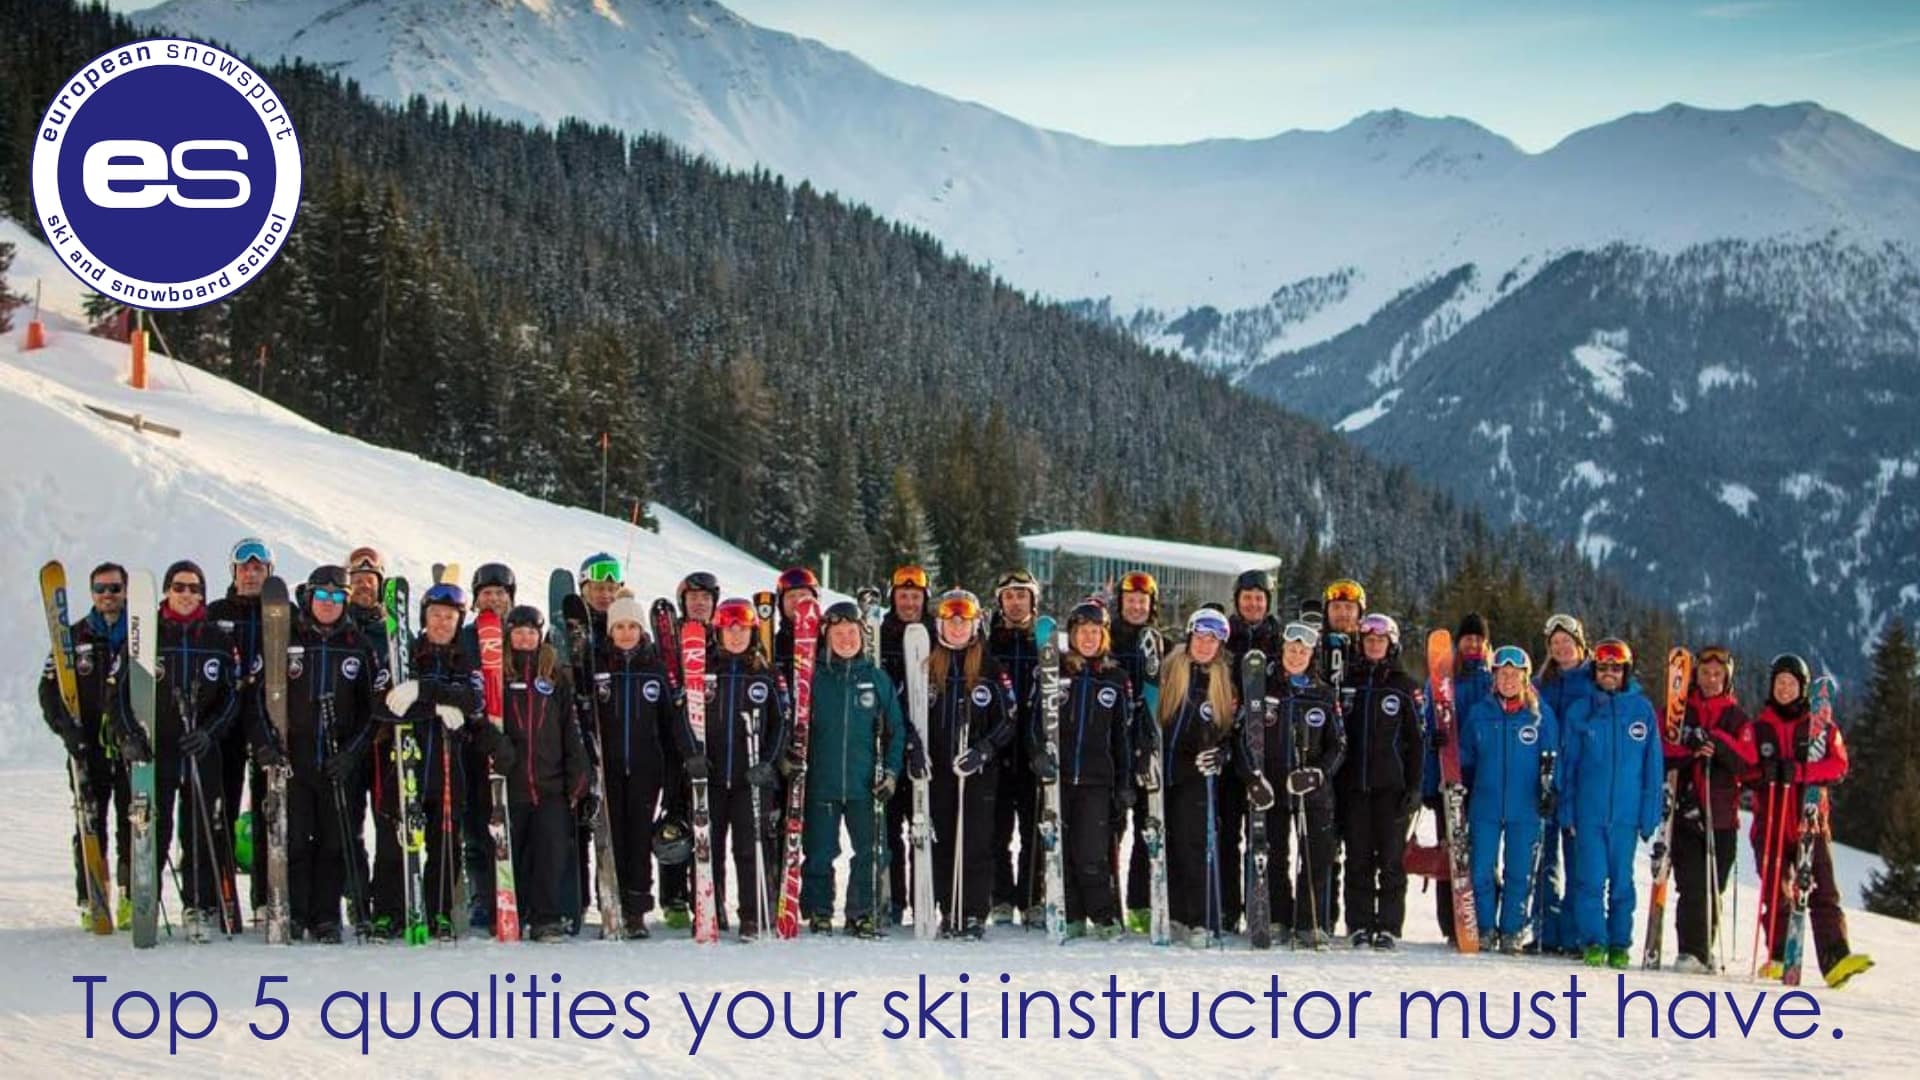 European Snowsport Verbier Ski School, Nendaz Ski School, Zermatt Ski School, Chamonix Ski School St Moritz Ski School